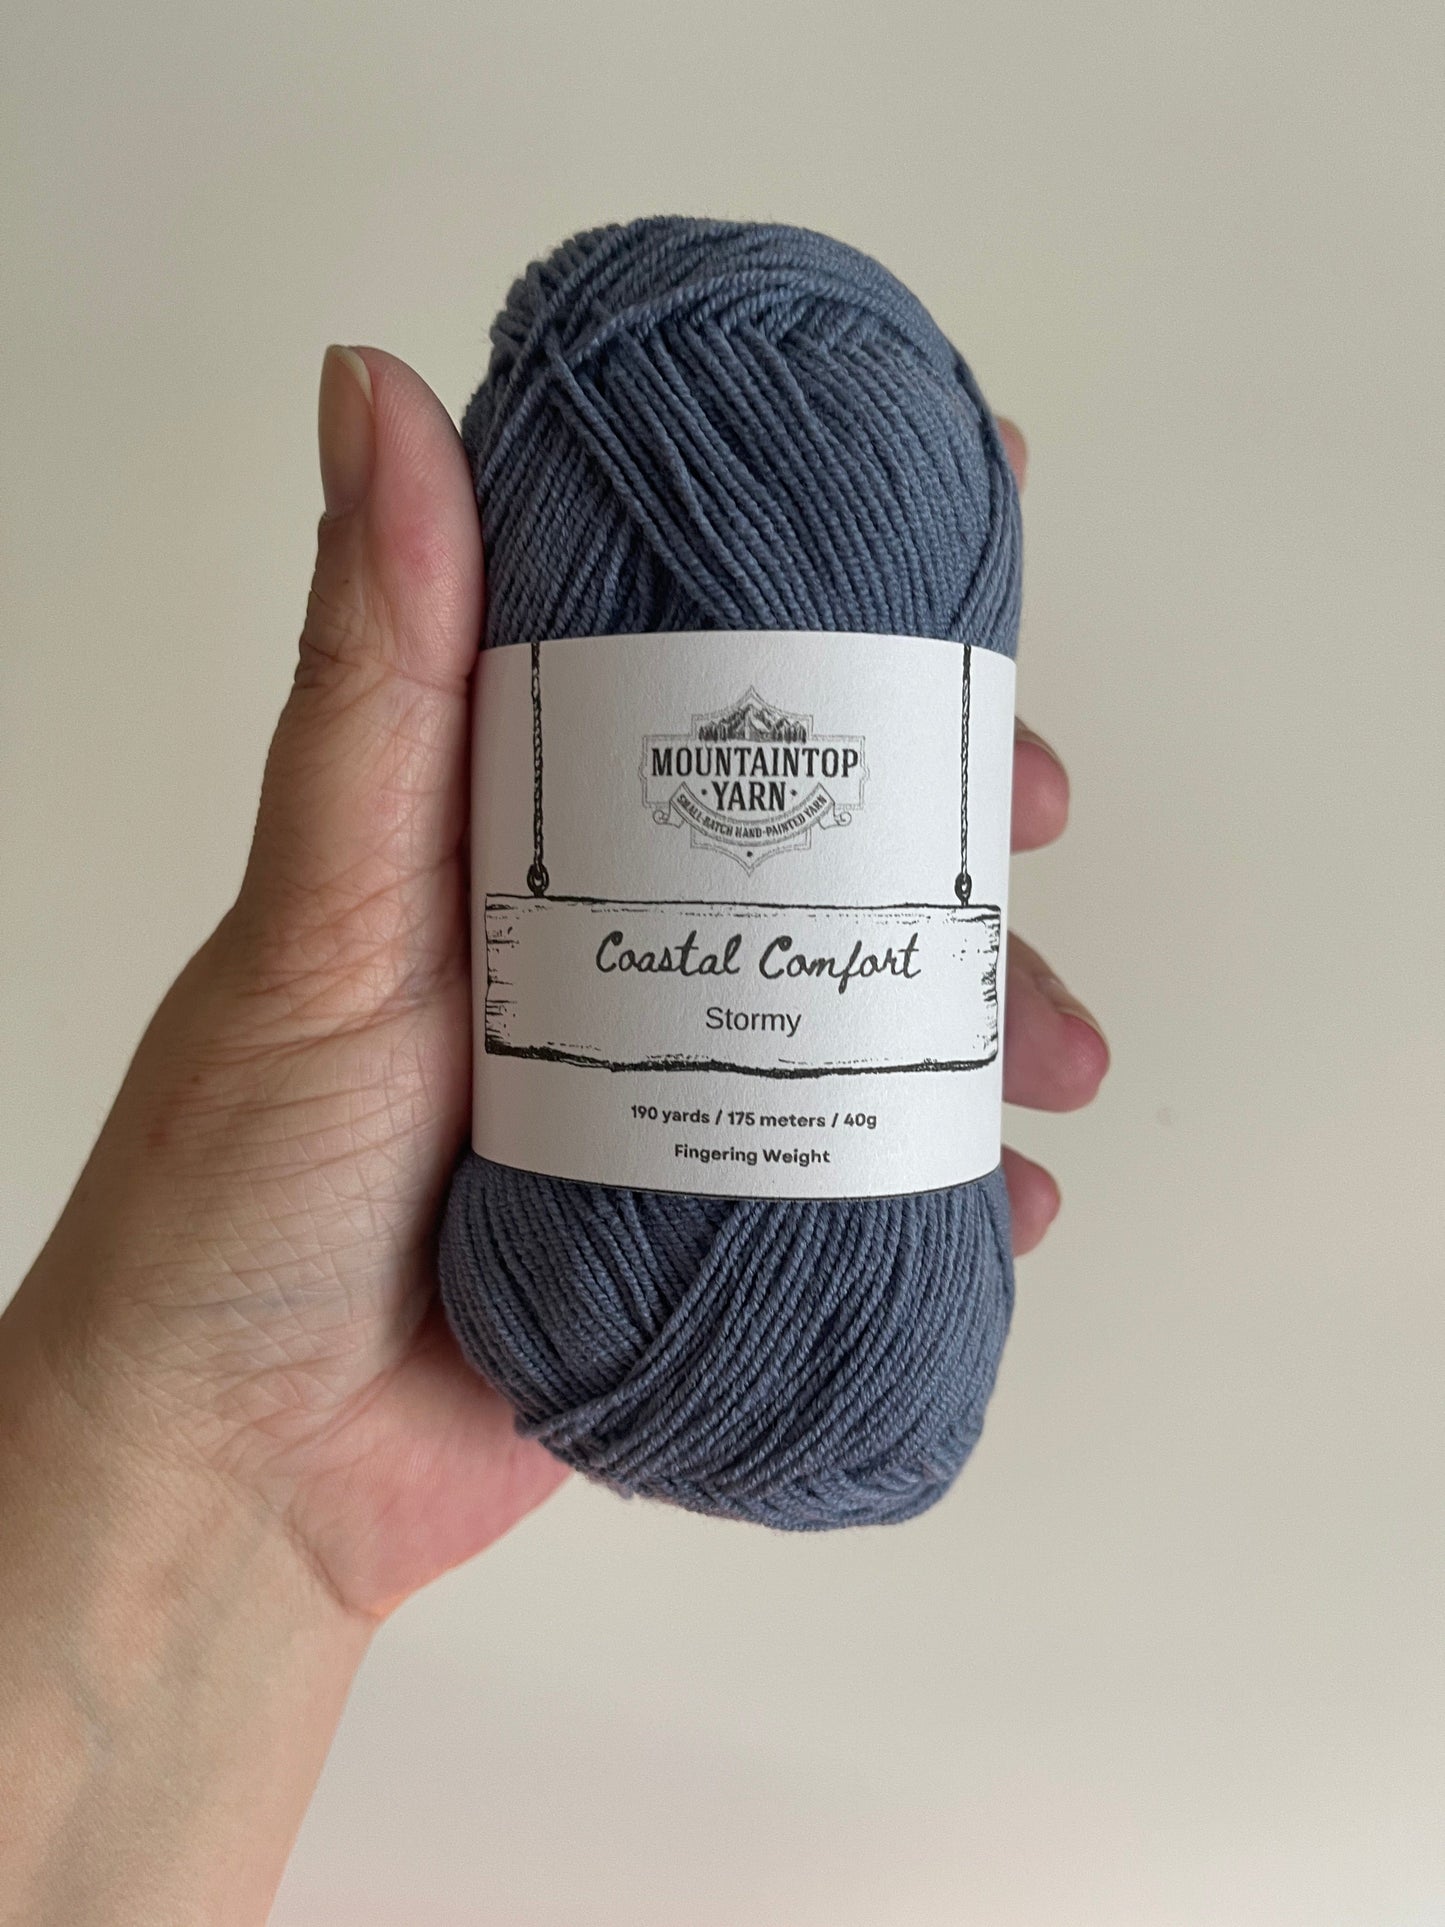 Mountaintop Yarn Stormy Coastal Comfort - Cotton and Acrylic Blend Yarn Yarn